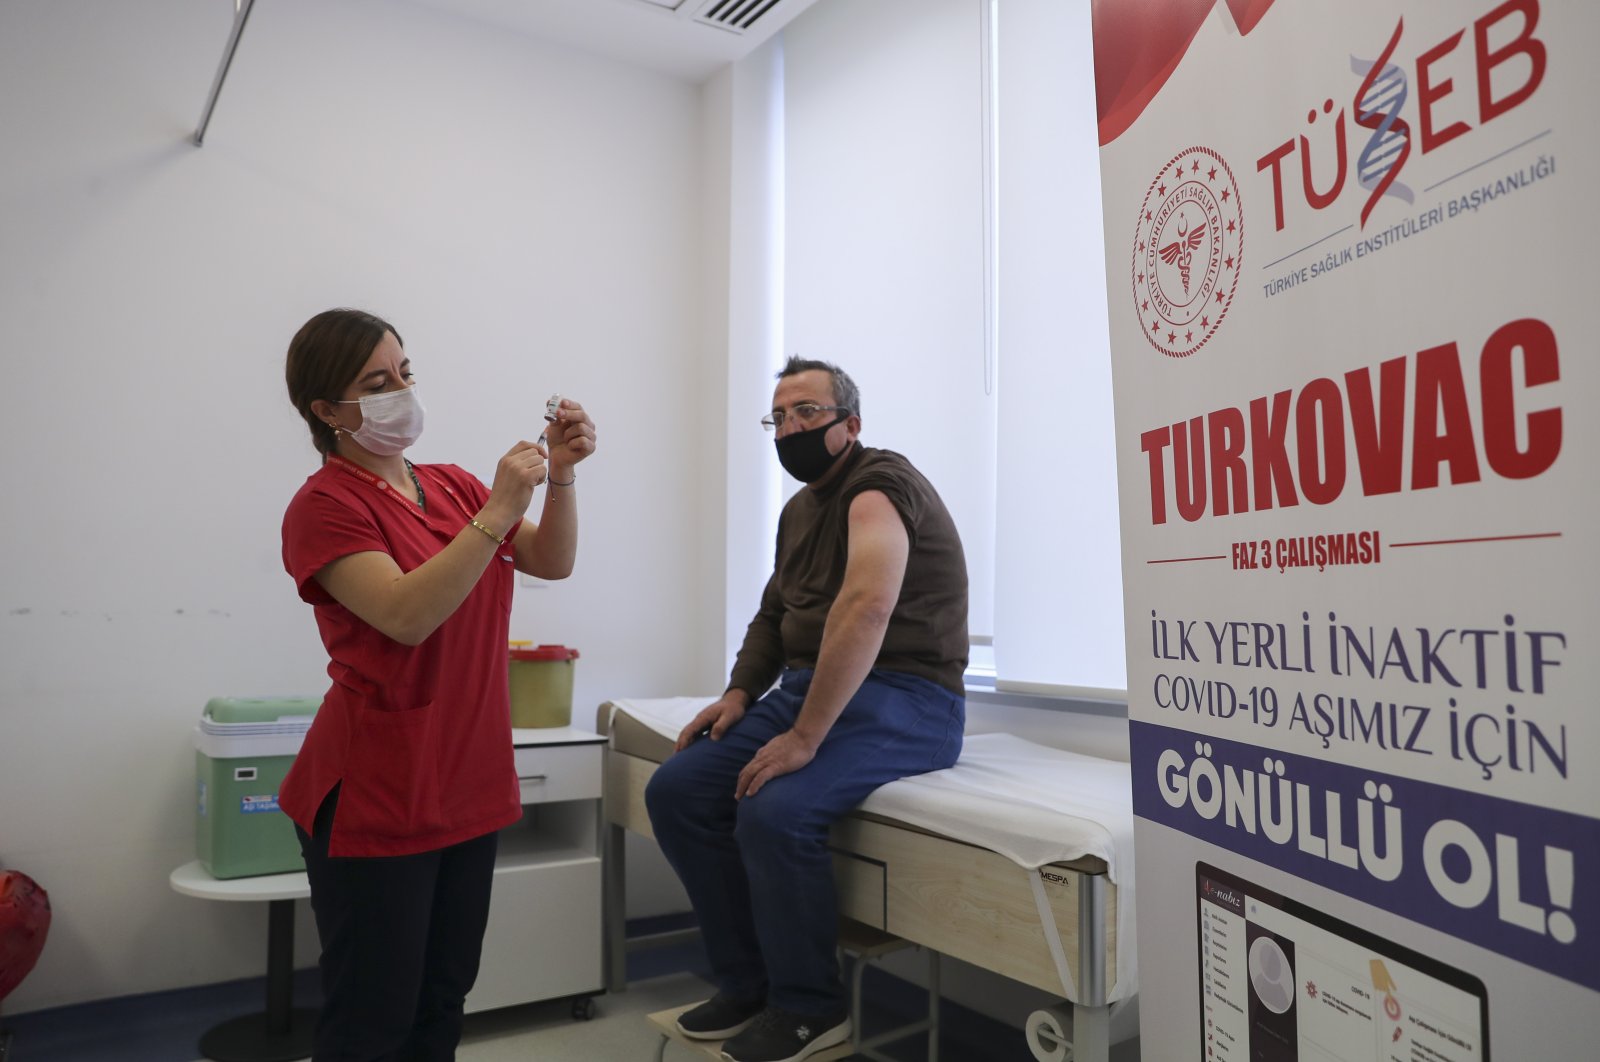 A nurse prepares to vaccinate a man with Turkovac at Ankara City Hospital, in the capital Ankara, Turkey, Dec. 30, 2021. (AA Photo)